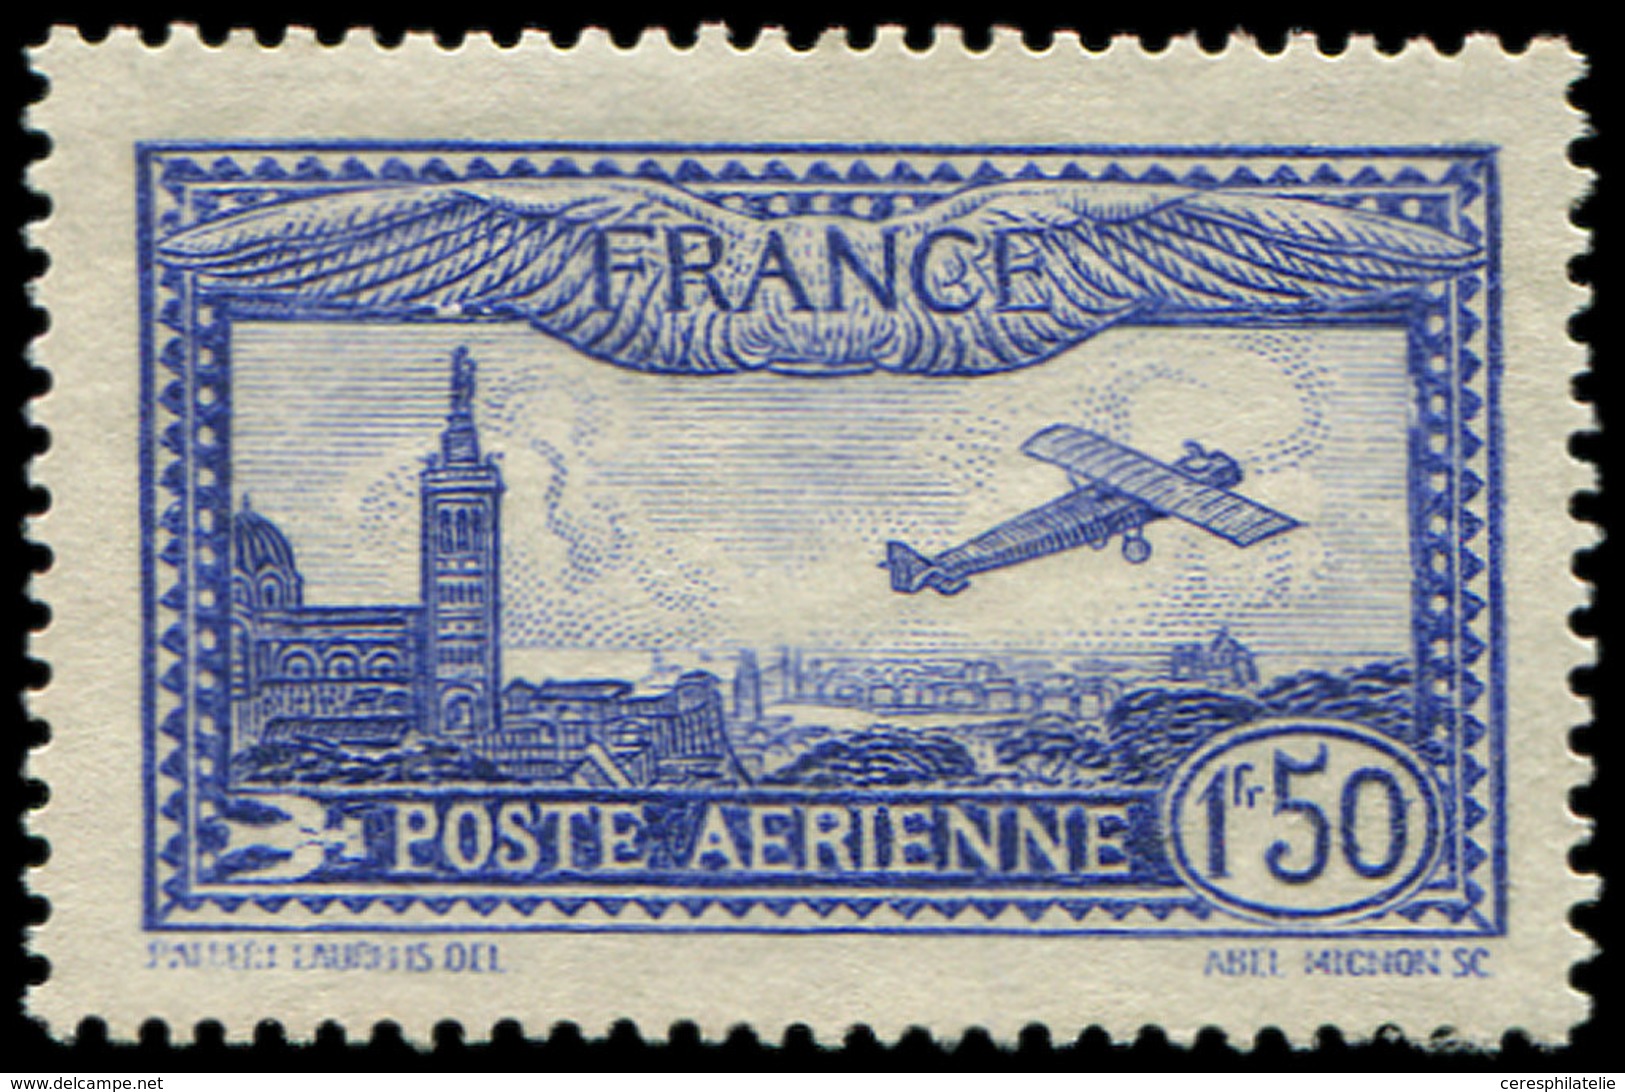 (*) POSTE AERIENNE - 6b  Vue De Marseille, 1f.50 Outremer Vif, TB - 1927-1959 Mint/hinged